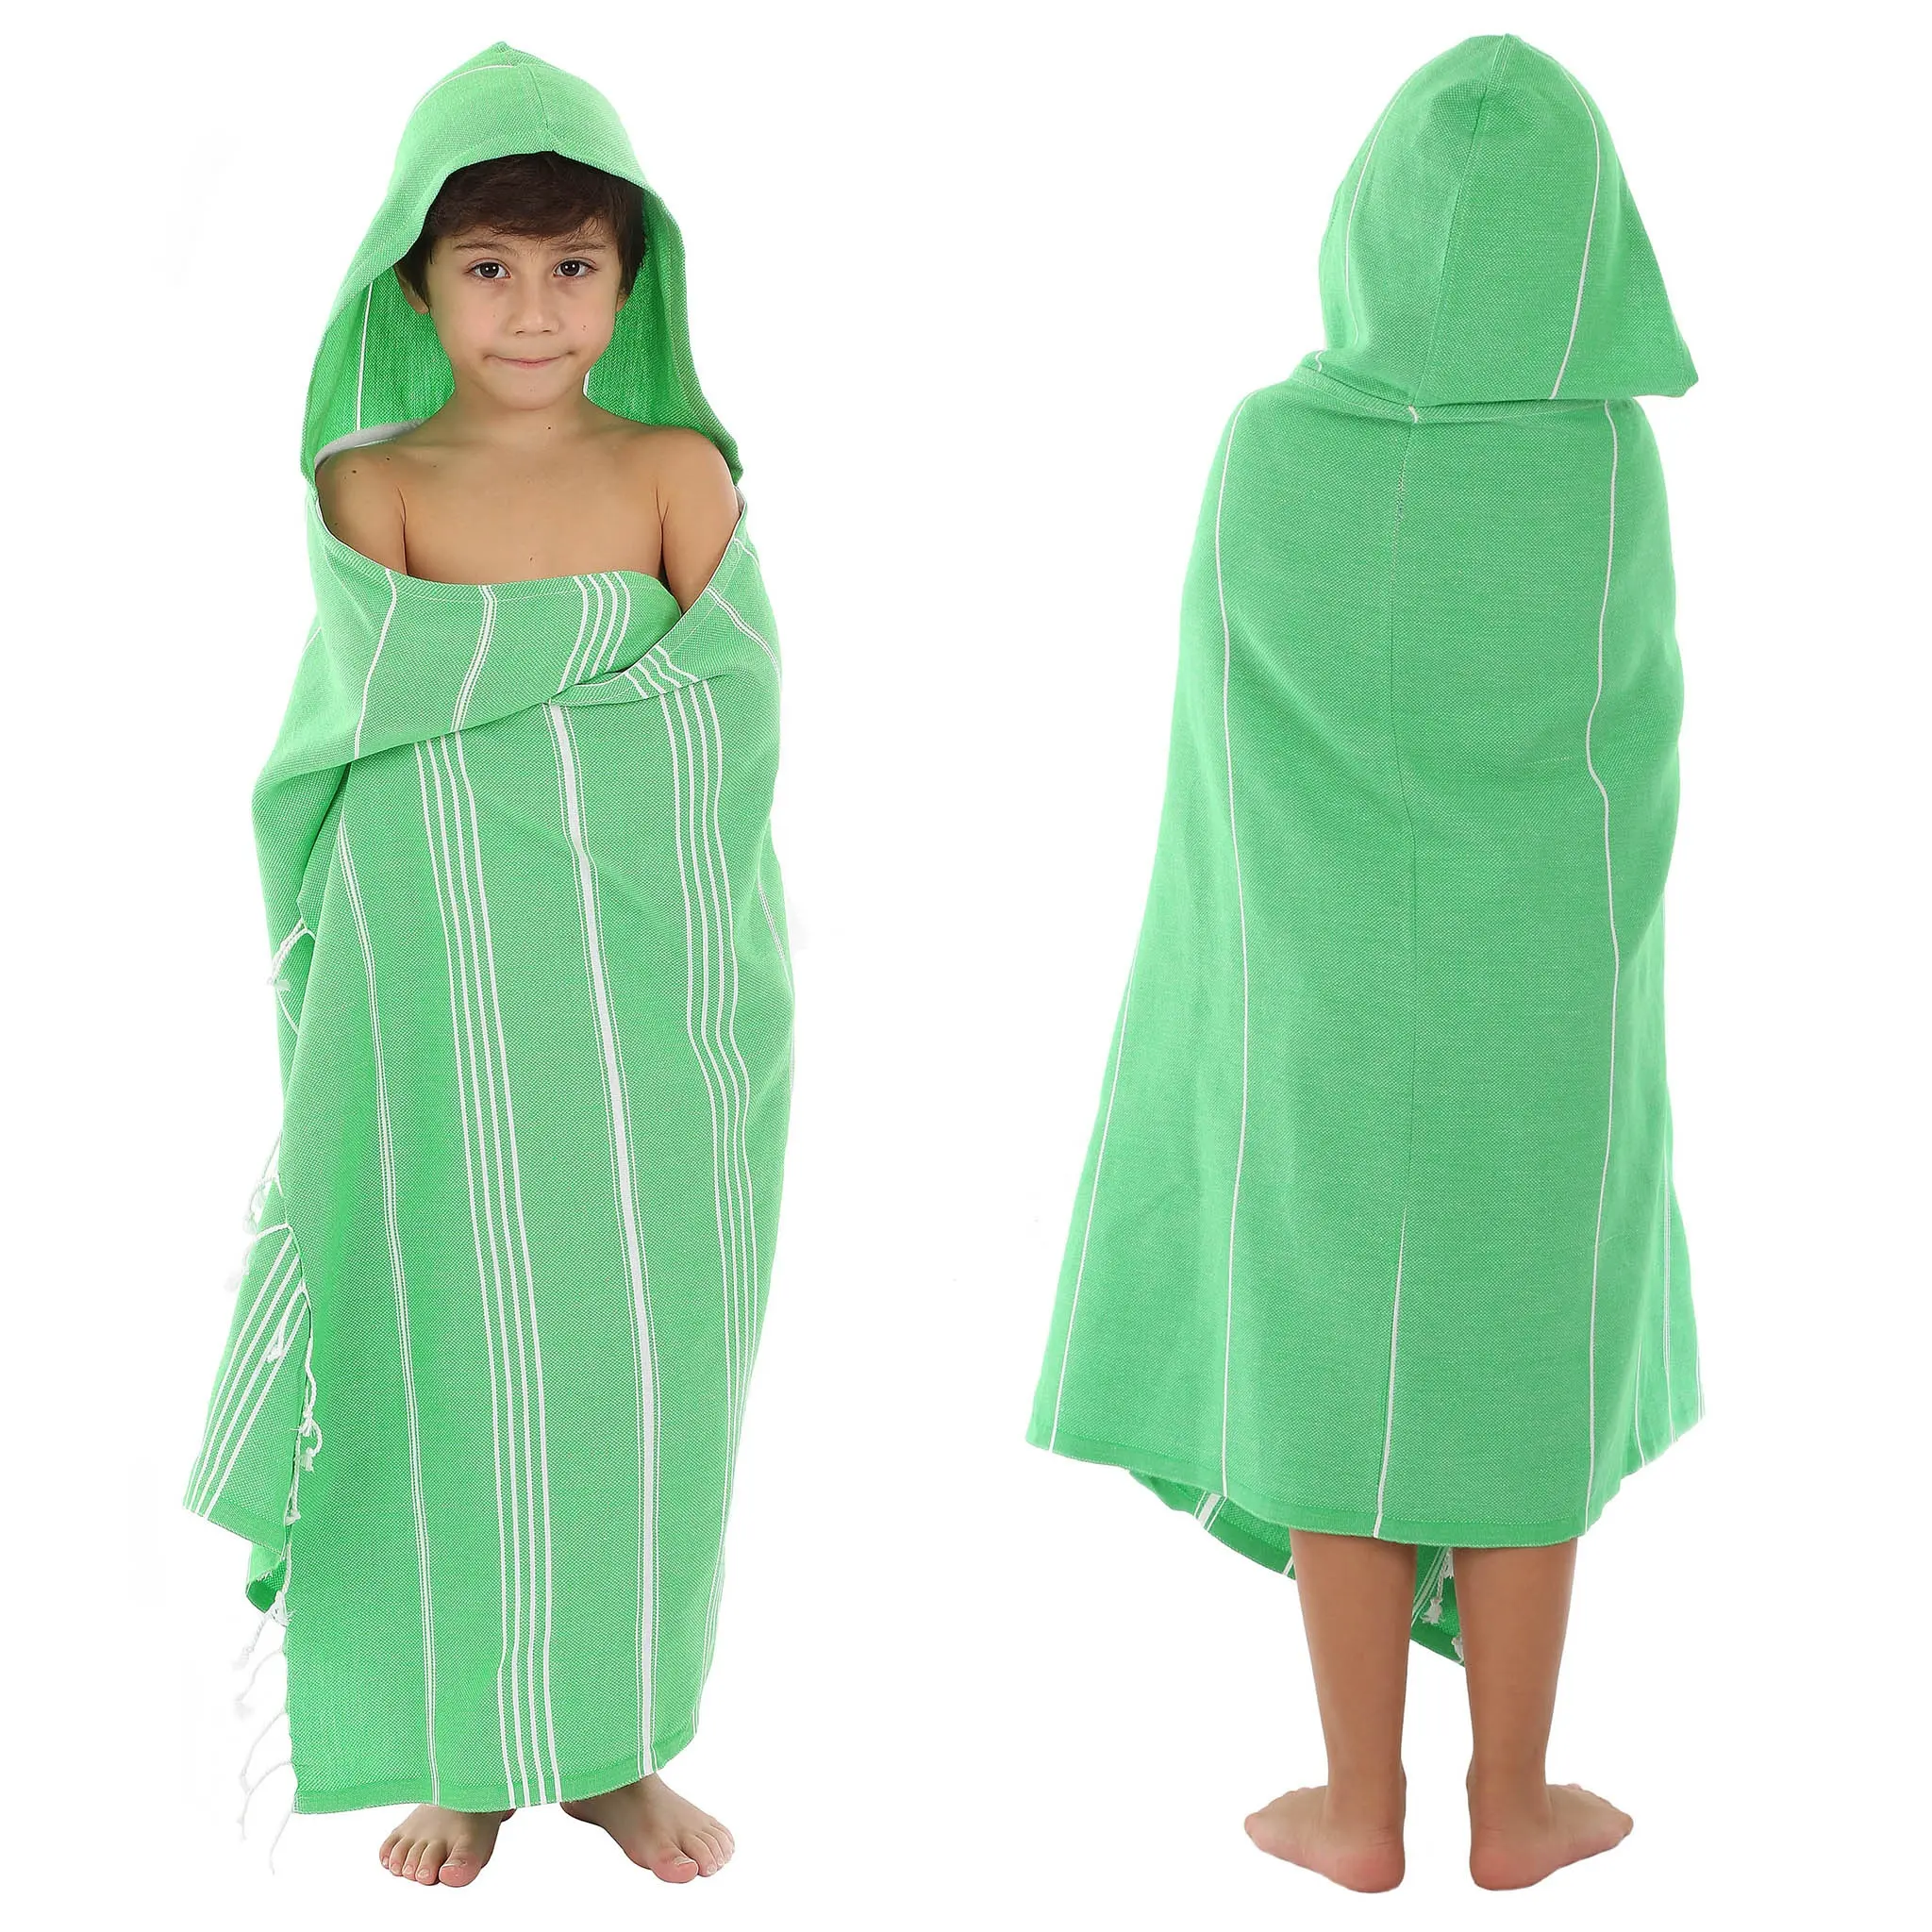 Judy-bolsa Convertible Superdry para niños, bolsa de playa 100% de algodón turco con capucha, Poncho, toallas de baño, bata de baño para bebé